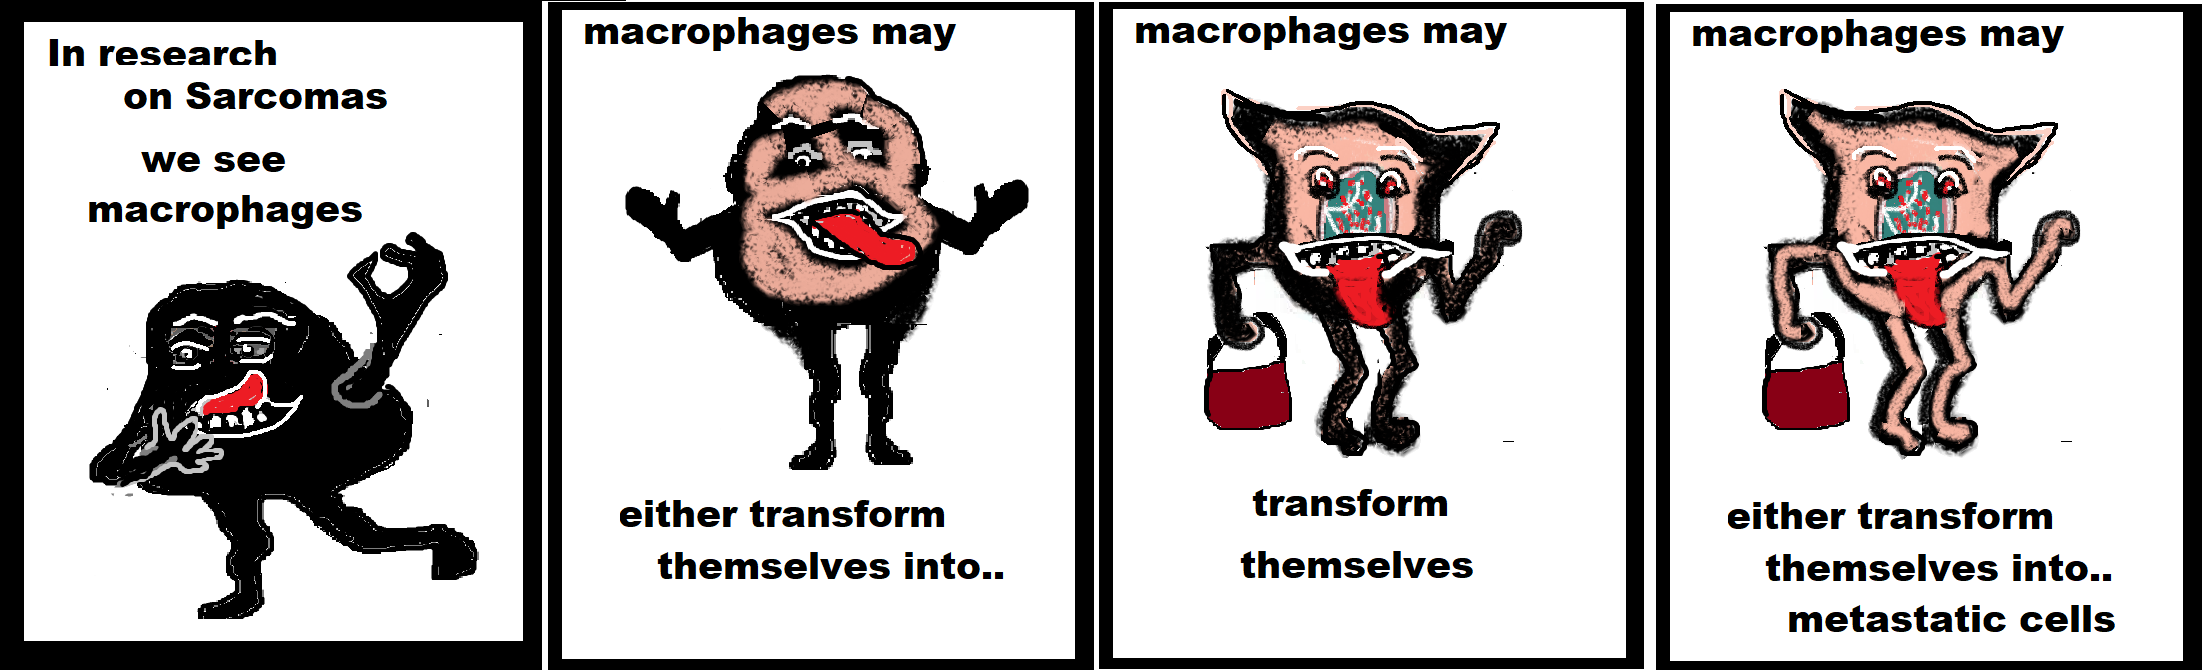 macrophages transform 1234